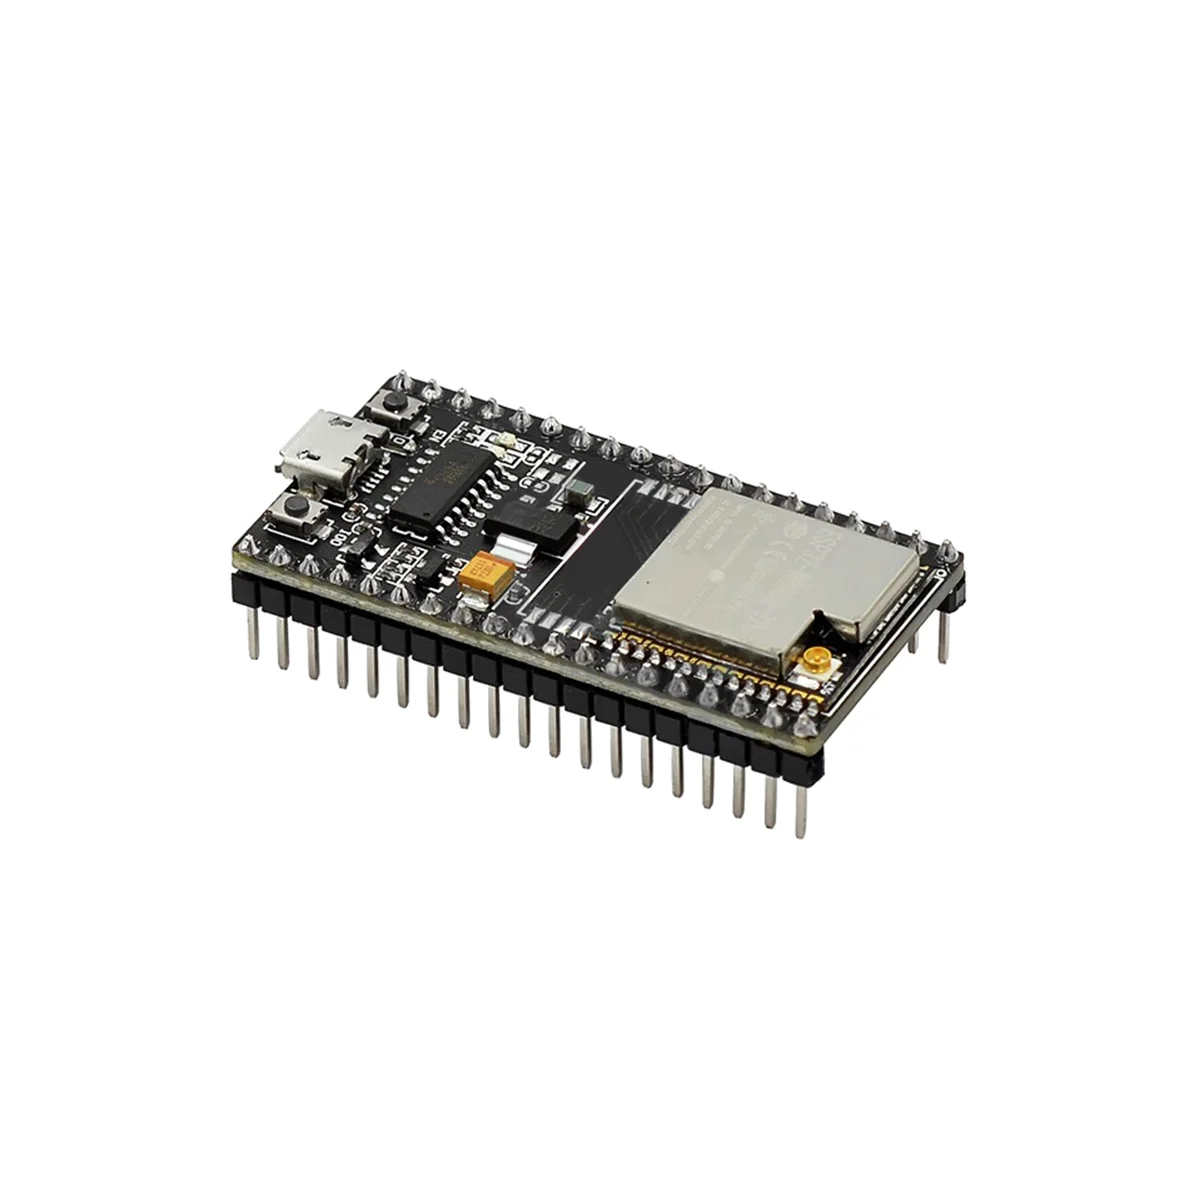 

ESP-WROOM-32UE IoT Development Board ESP32-WROOM-32U WIFI+Bluetooth Main Board Serial Port Module